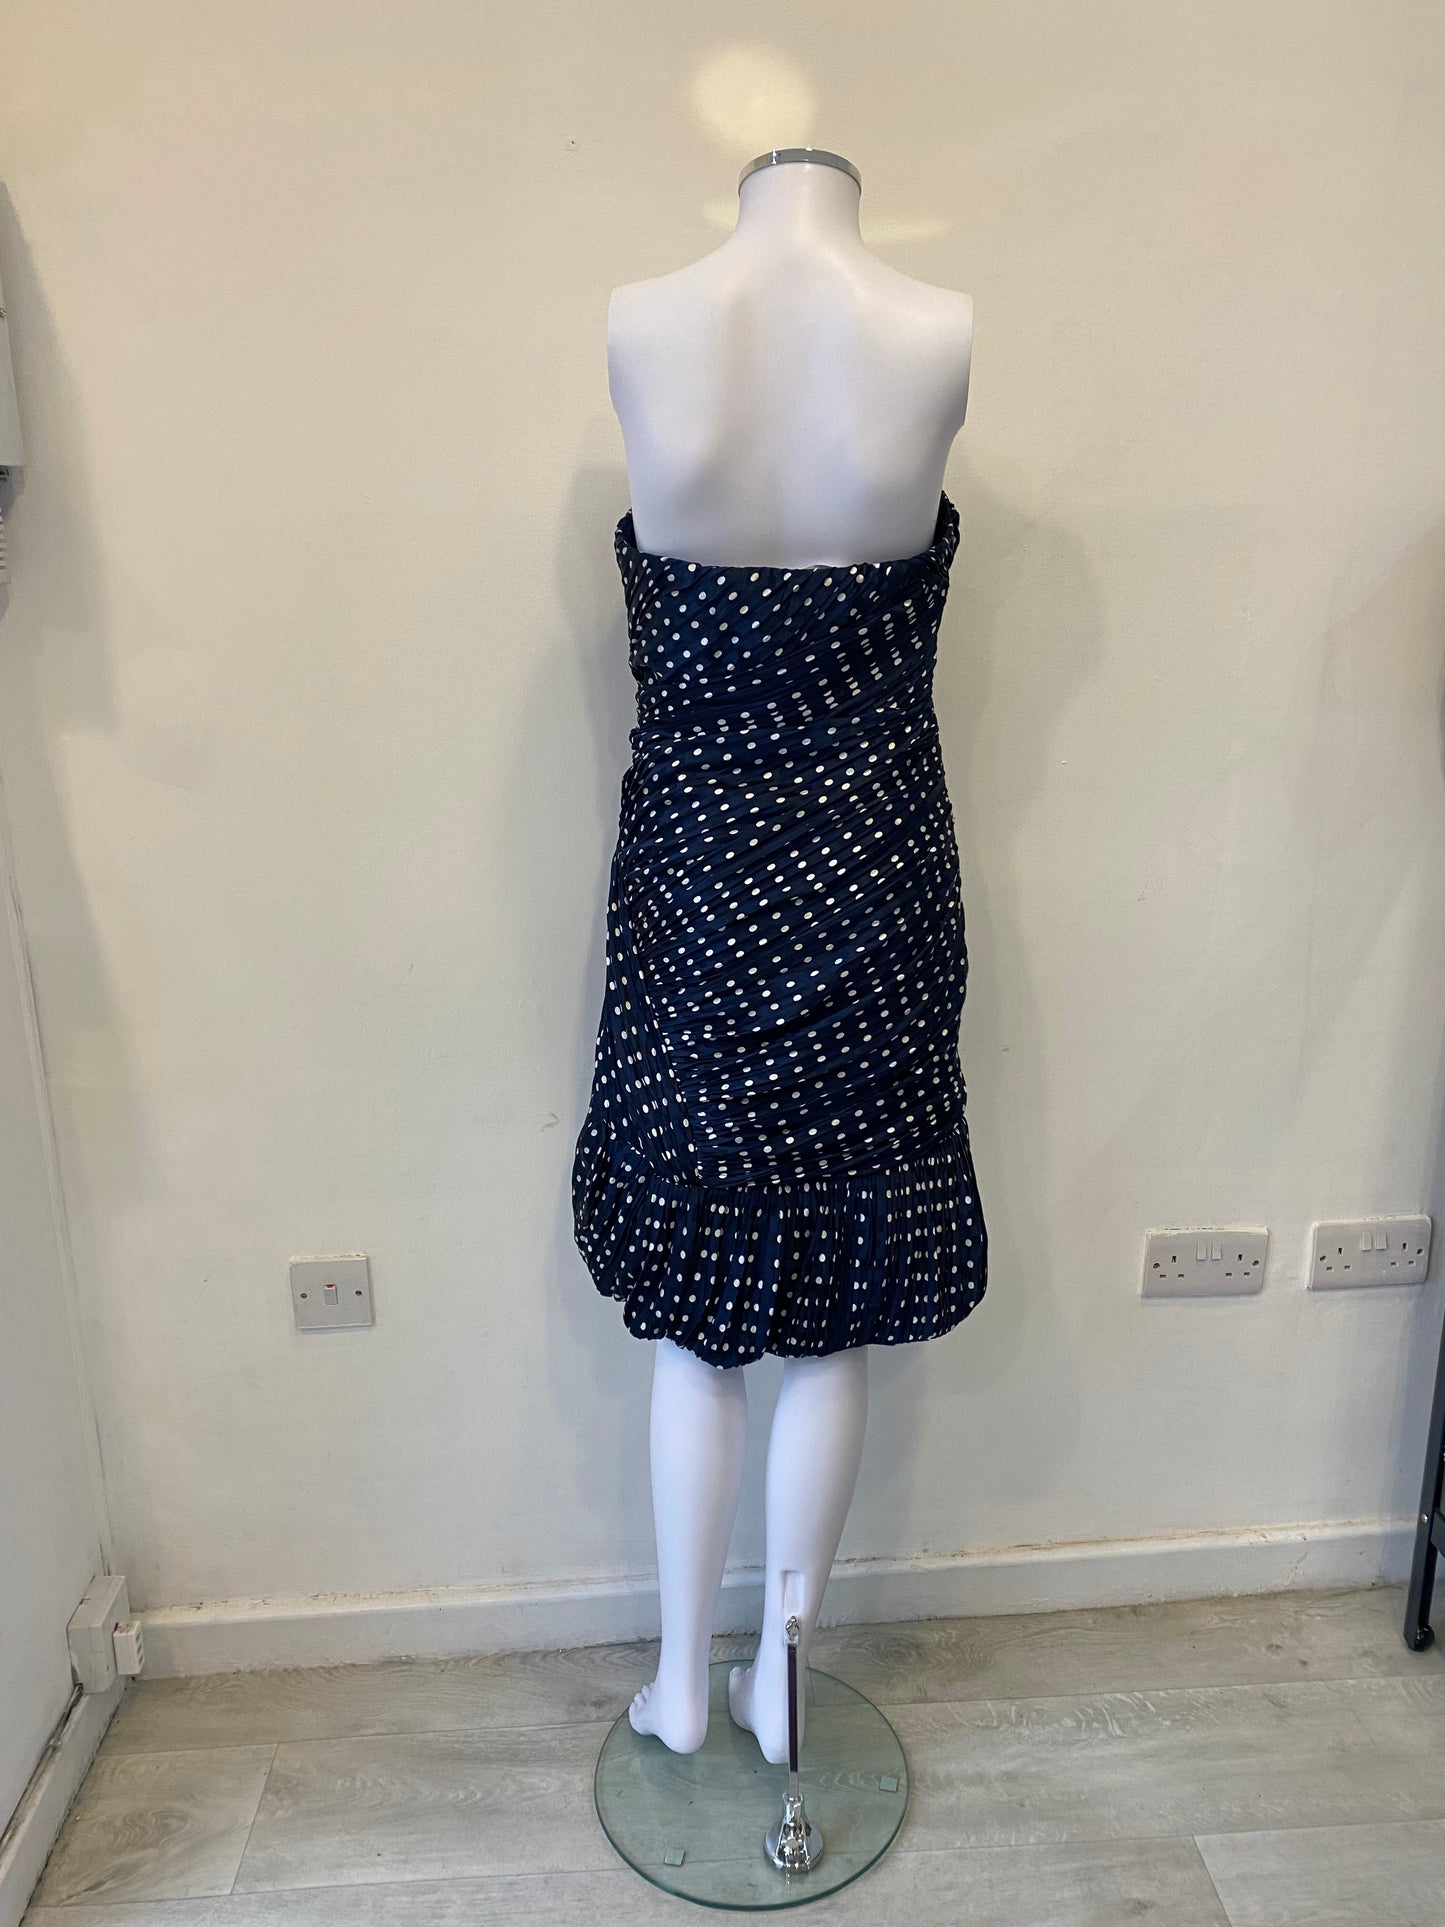 Tory Burch Strapless Navy Spot Dress Size 12